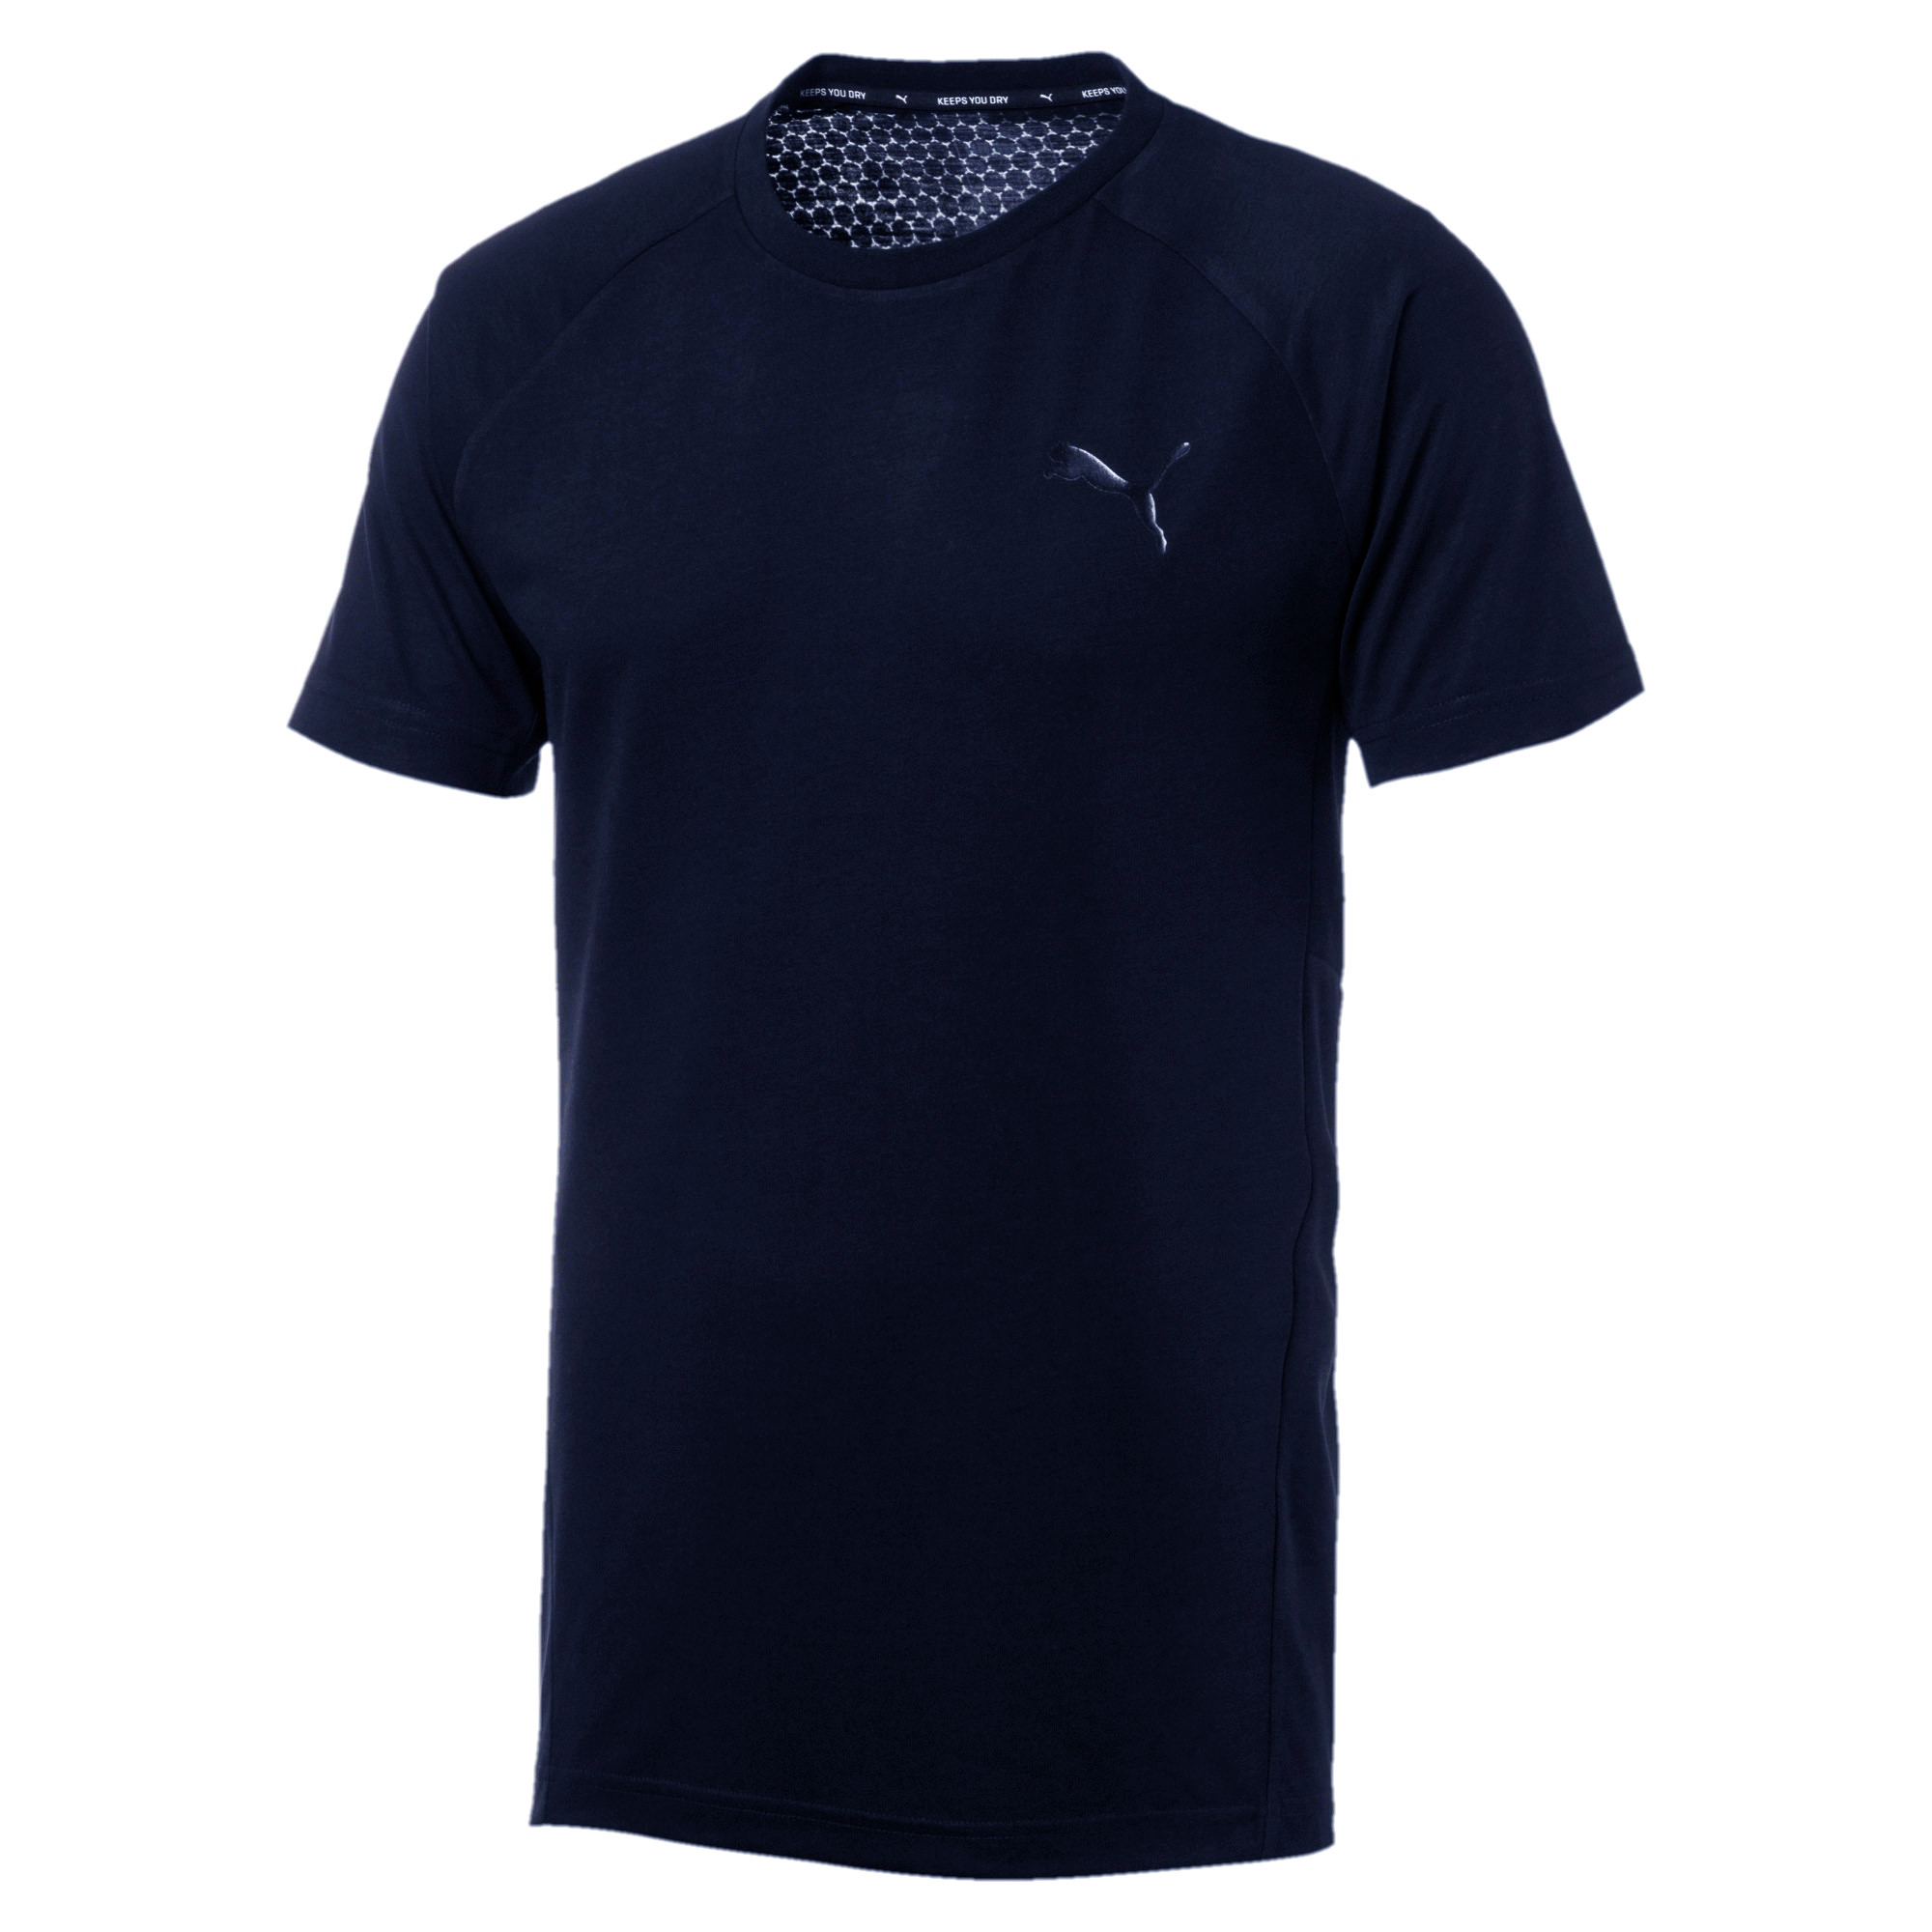 PUMA Evostripe Move Tee Herren T-shirt Sportswear 854071 06 Blau